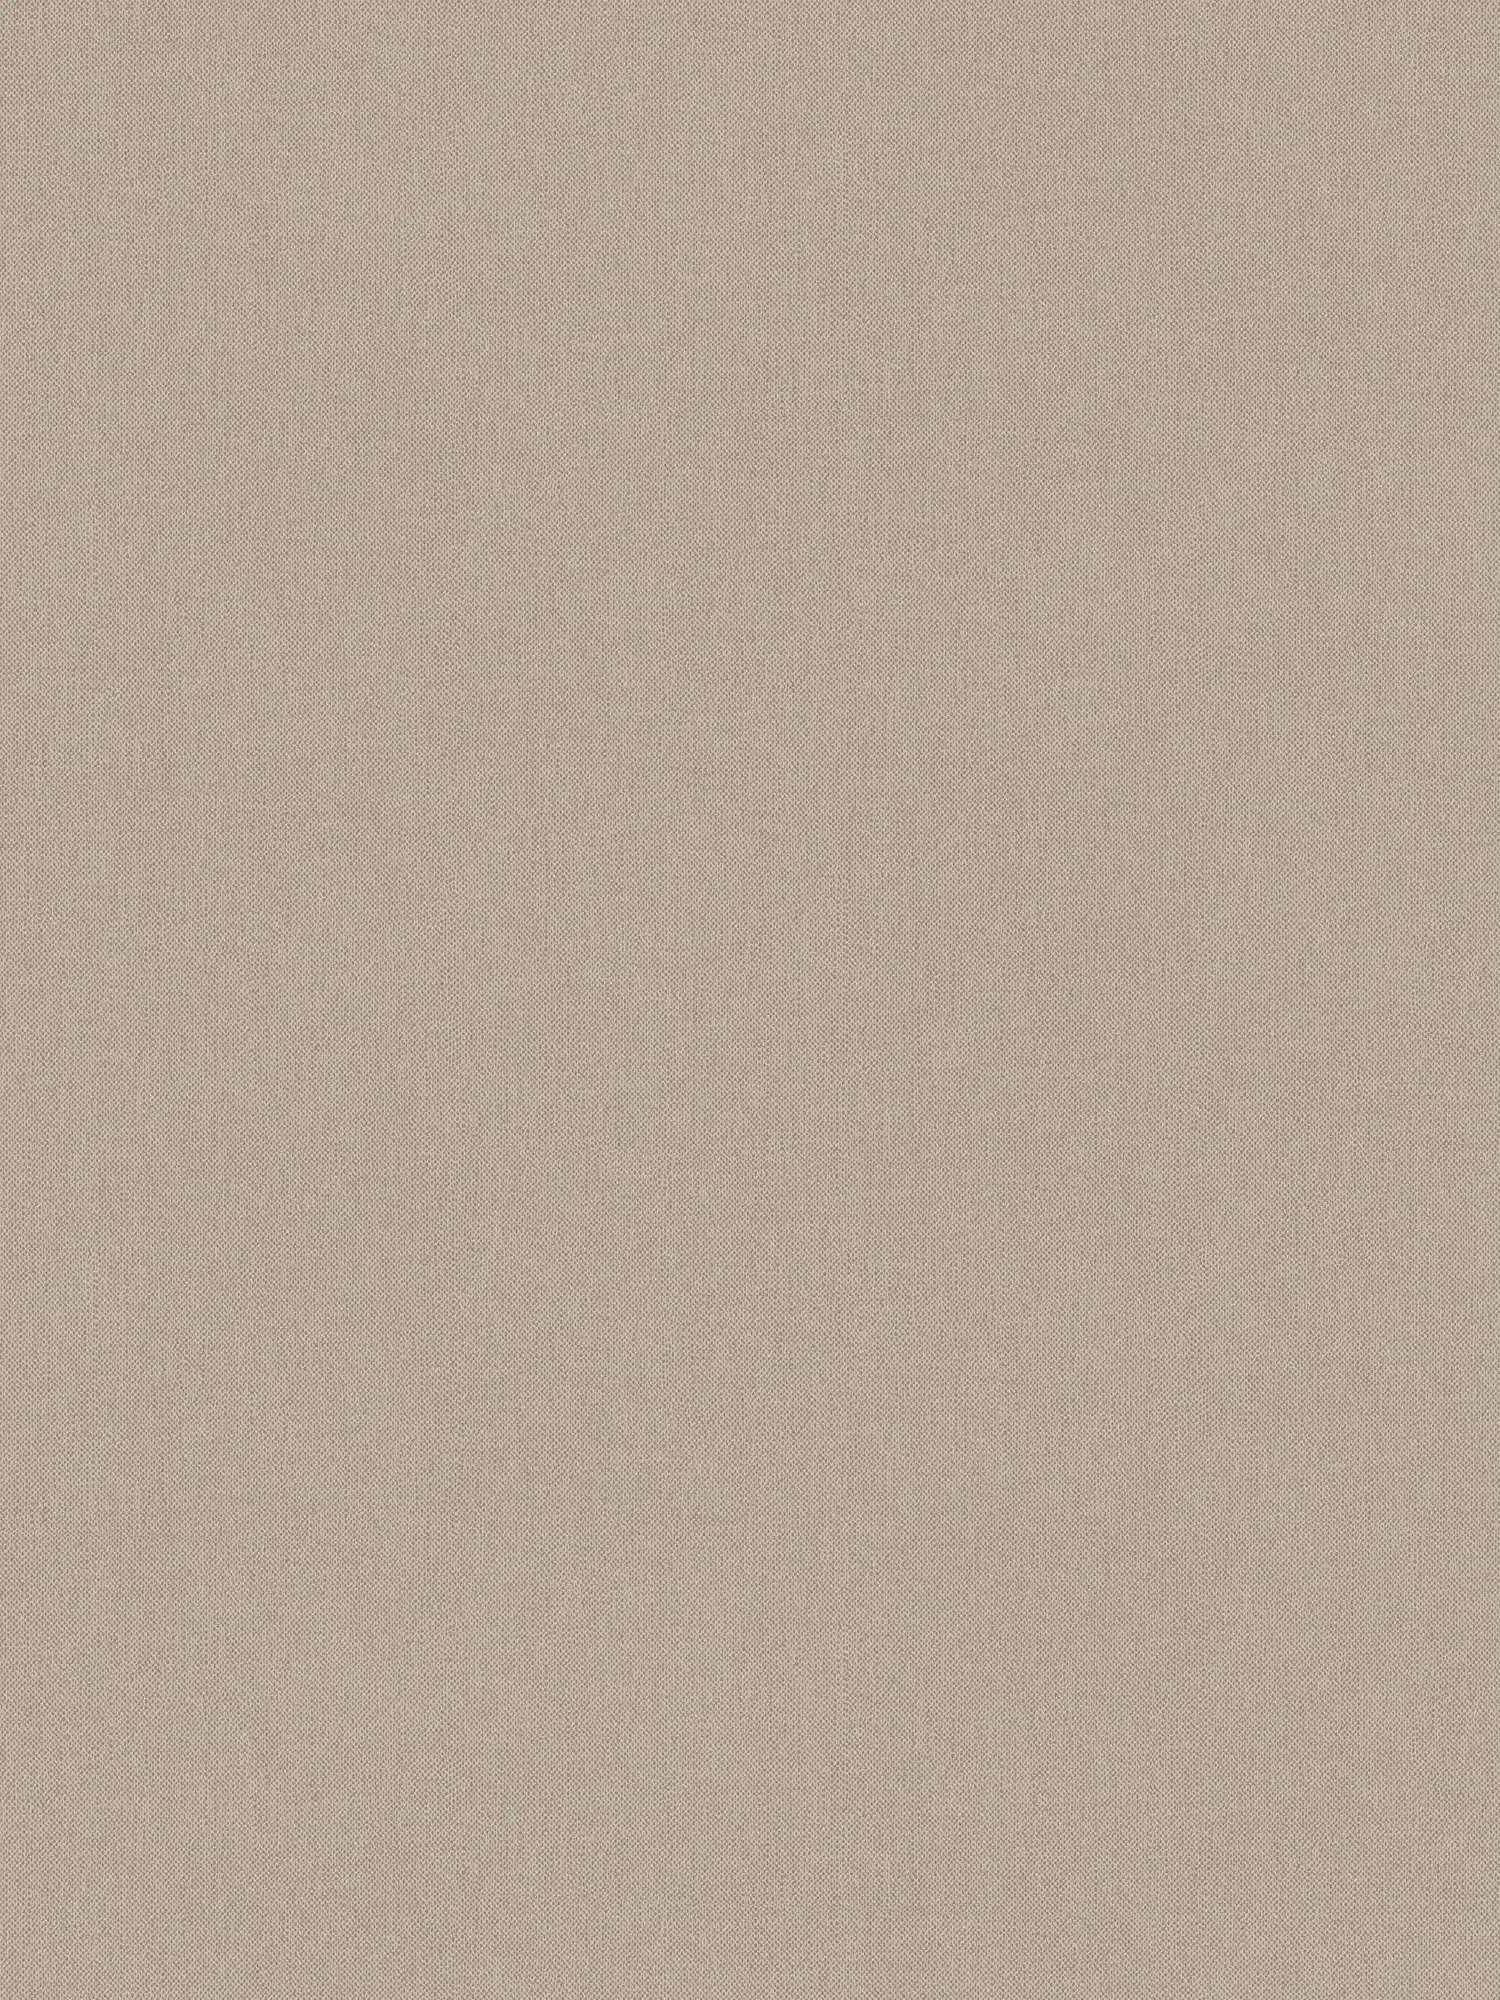 Non-woven wallpaper beige plain & matt with textile texture - beige, brown
